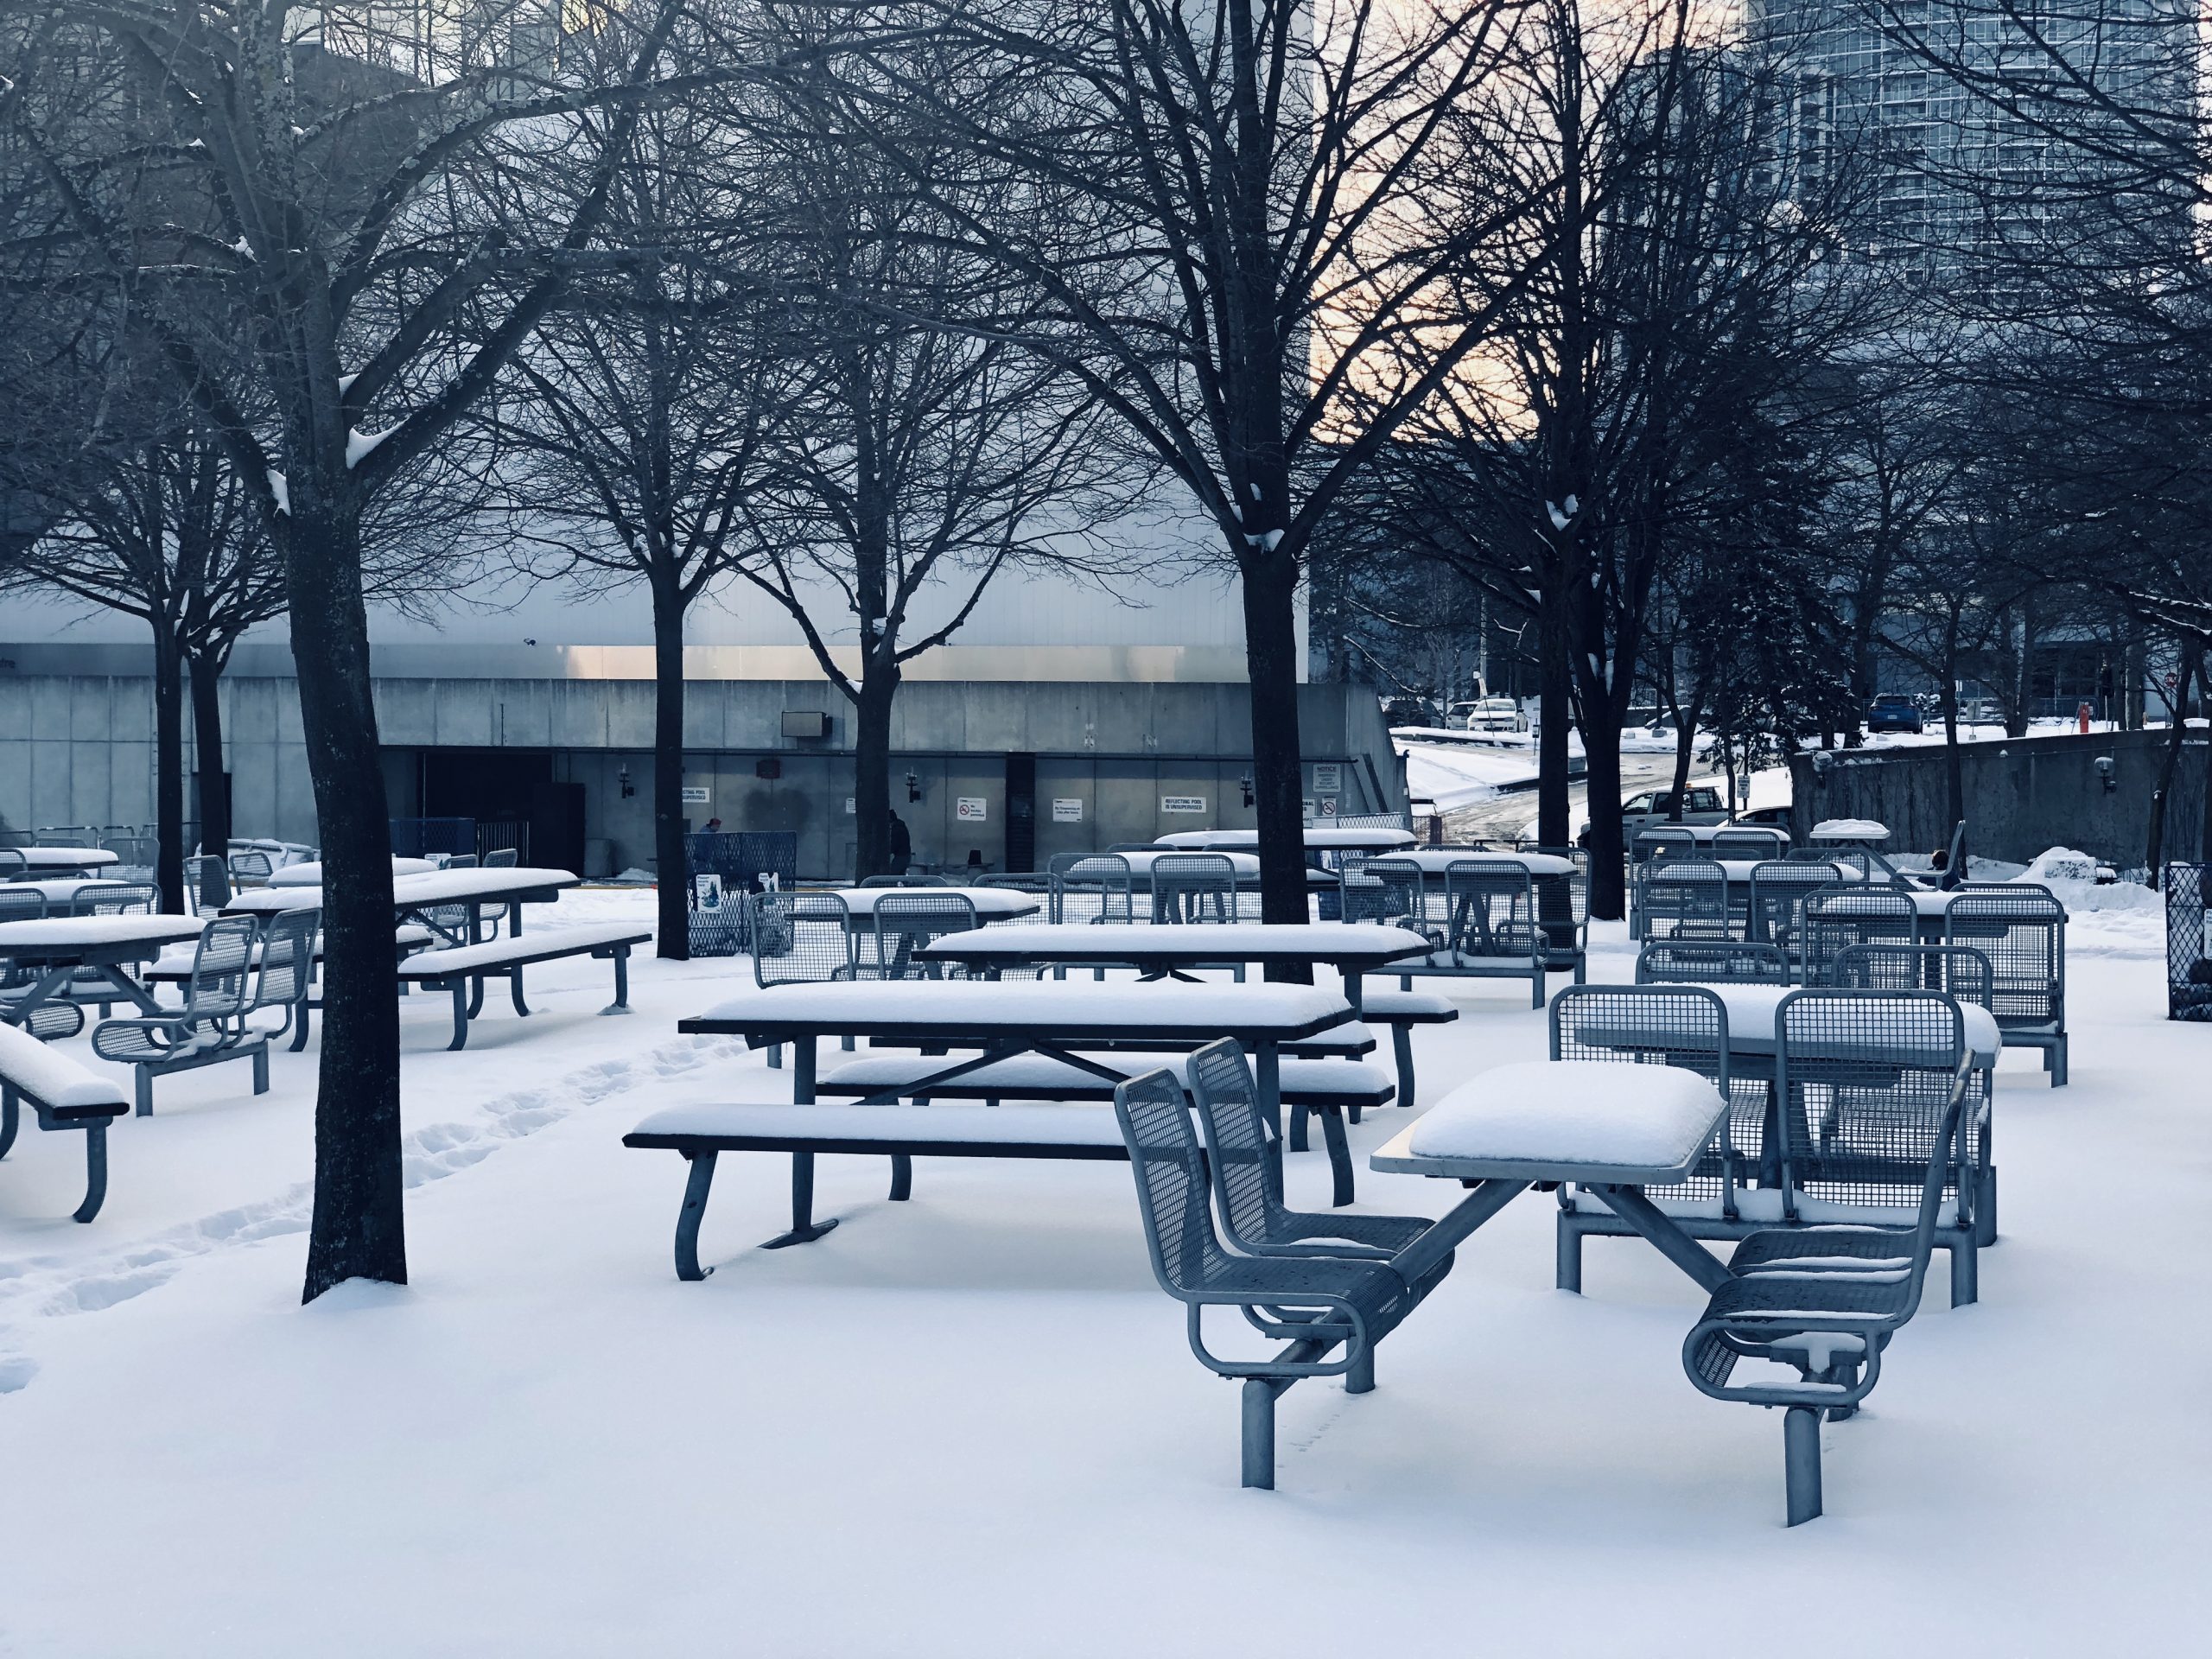 Snowy area in Toronto